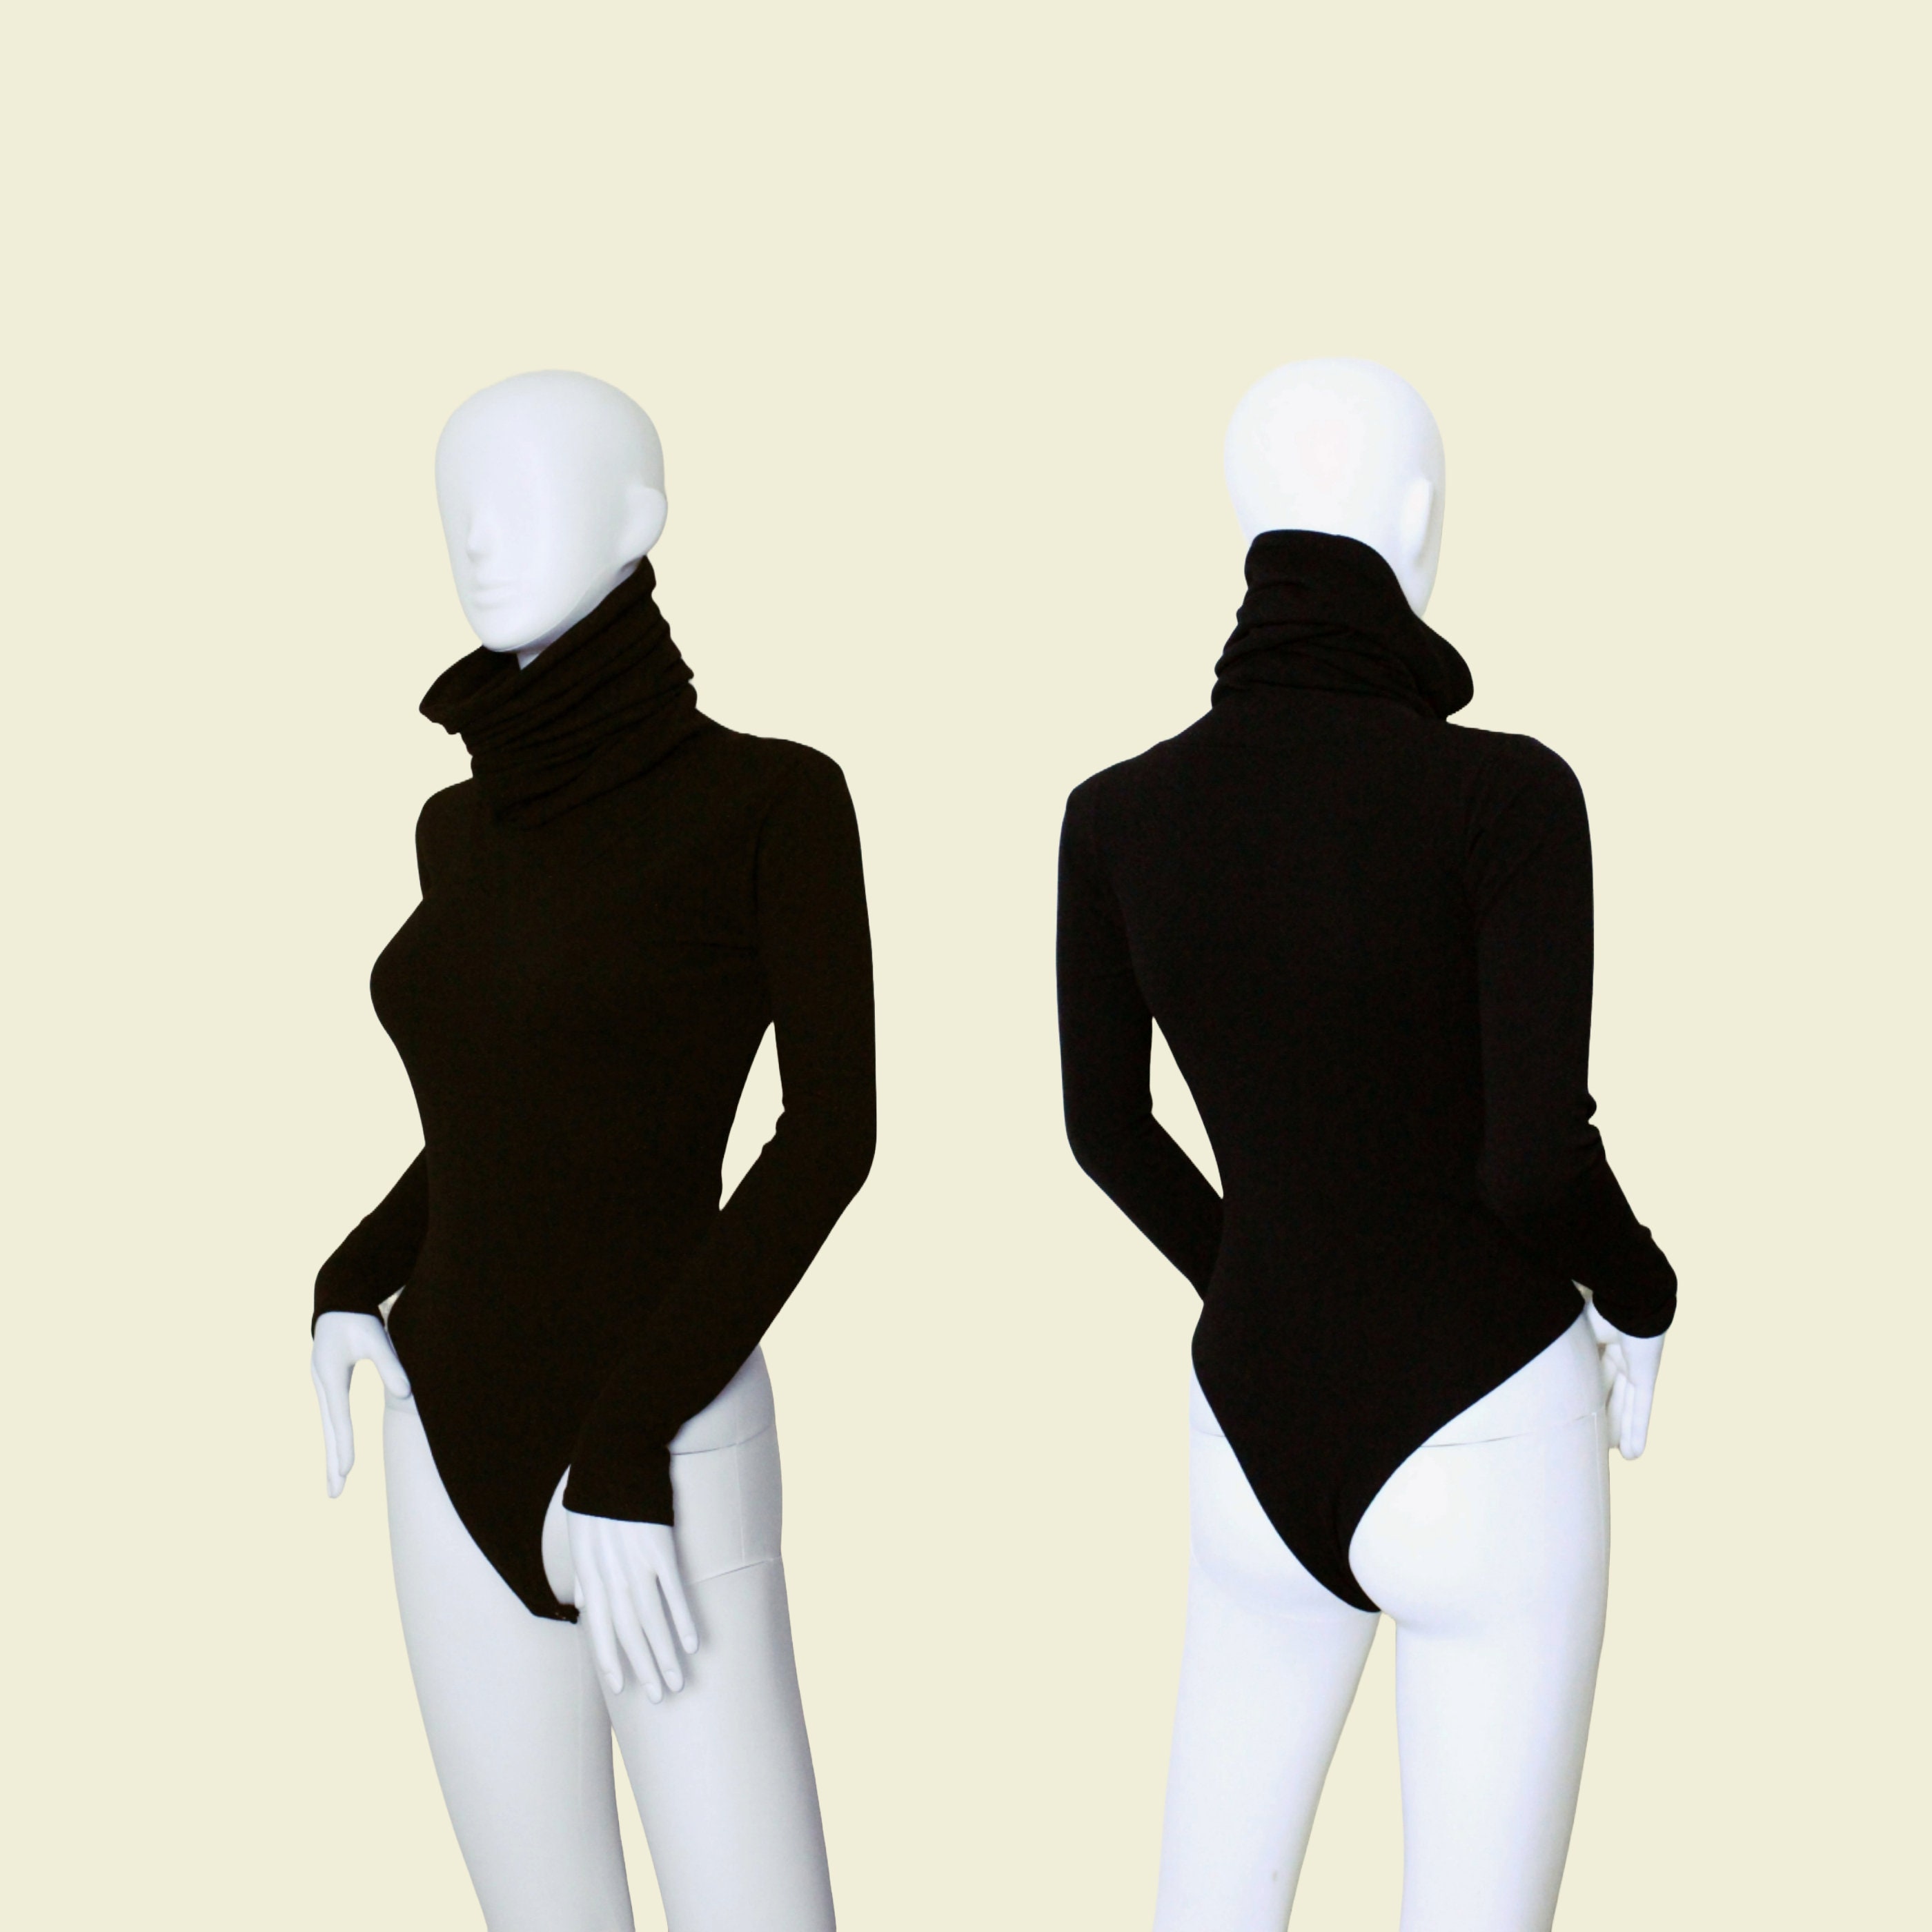 Optical Illusion Bodysuit Women Clothing Athletic Black White